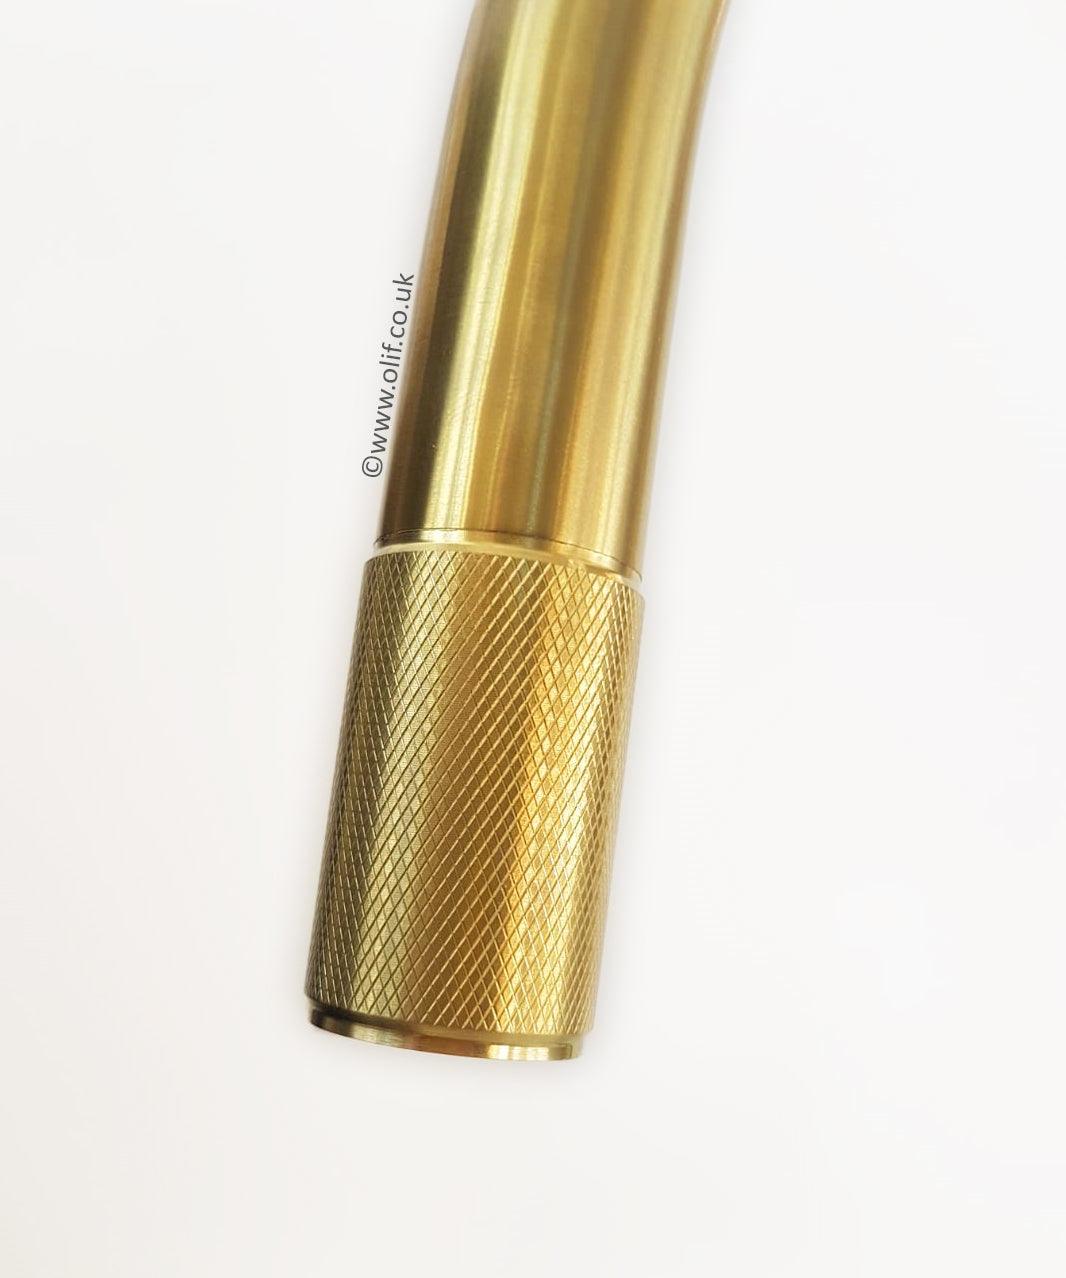 Nivito RH 140 INDUSTRIAL Brushed Brass/Gold, kitchen mixer tap - Olif